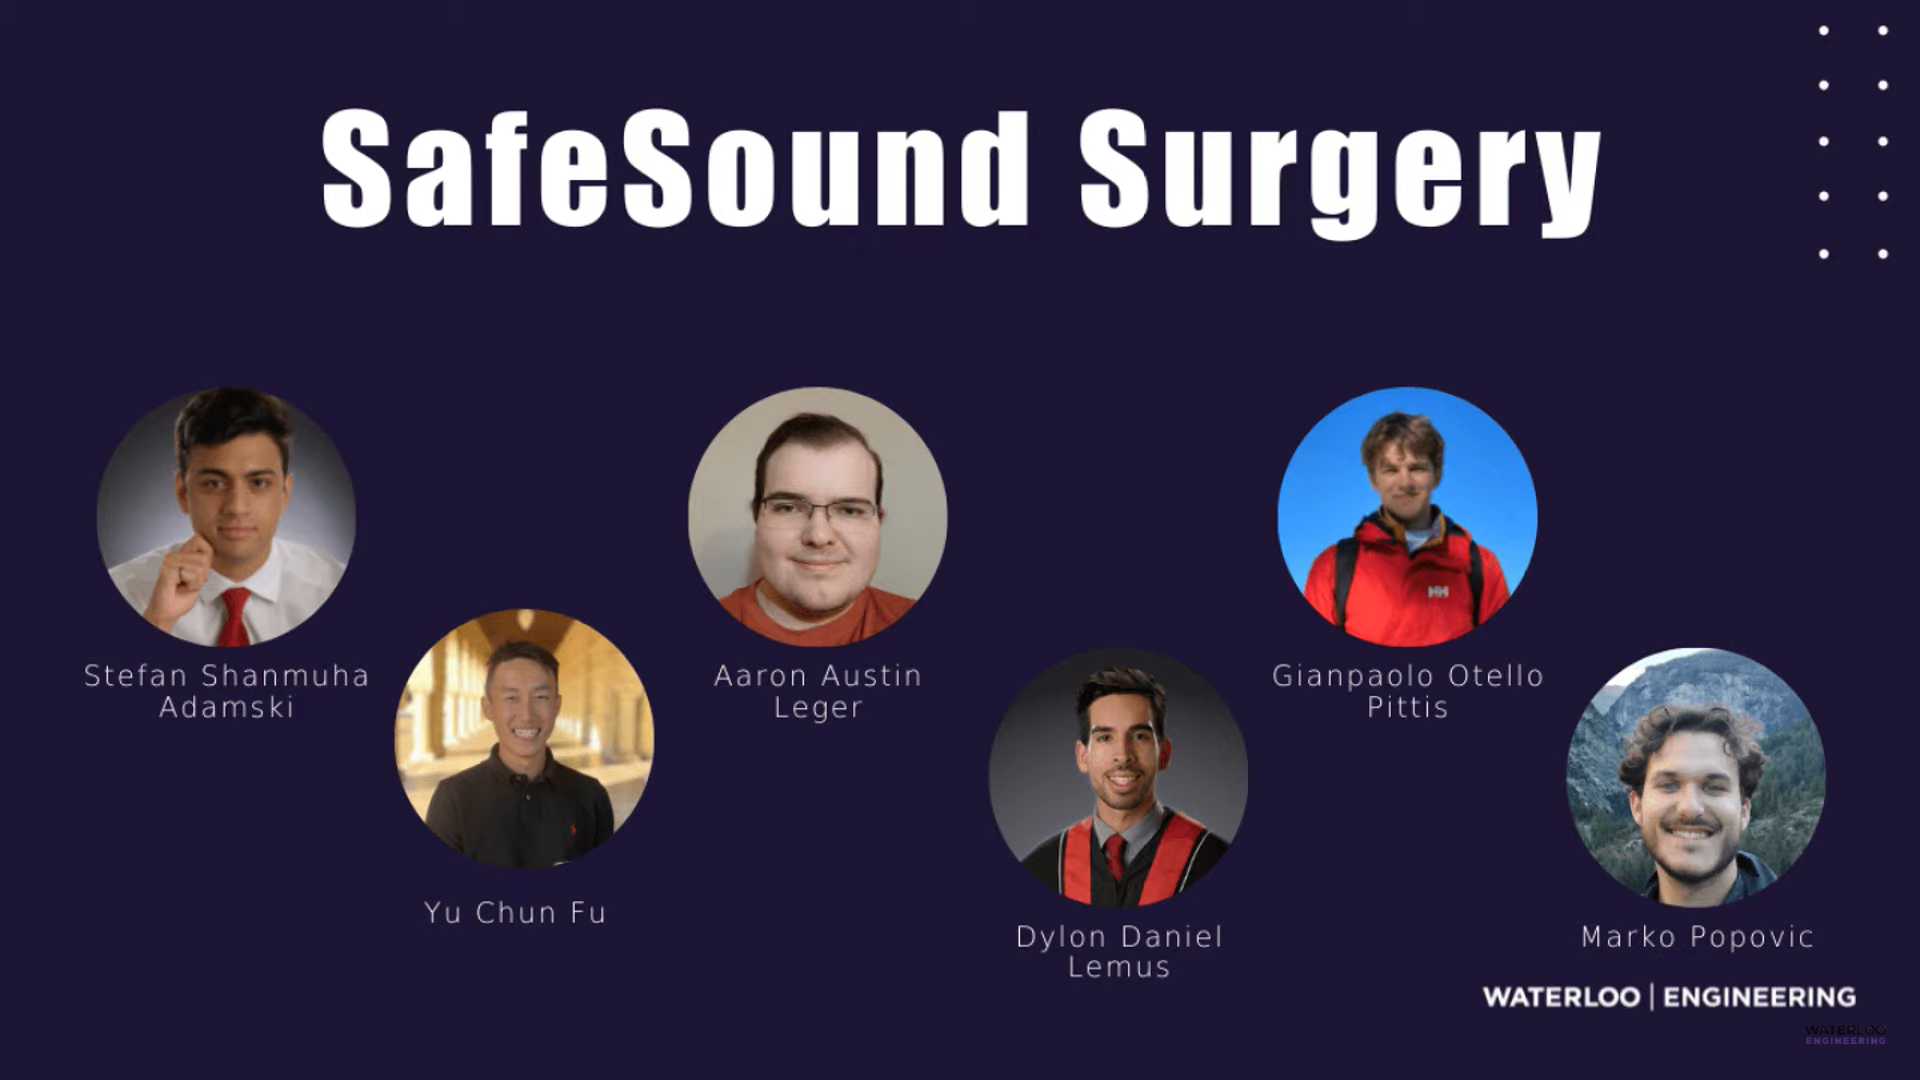 Team SafeSound Surgery